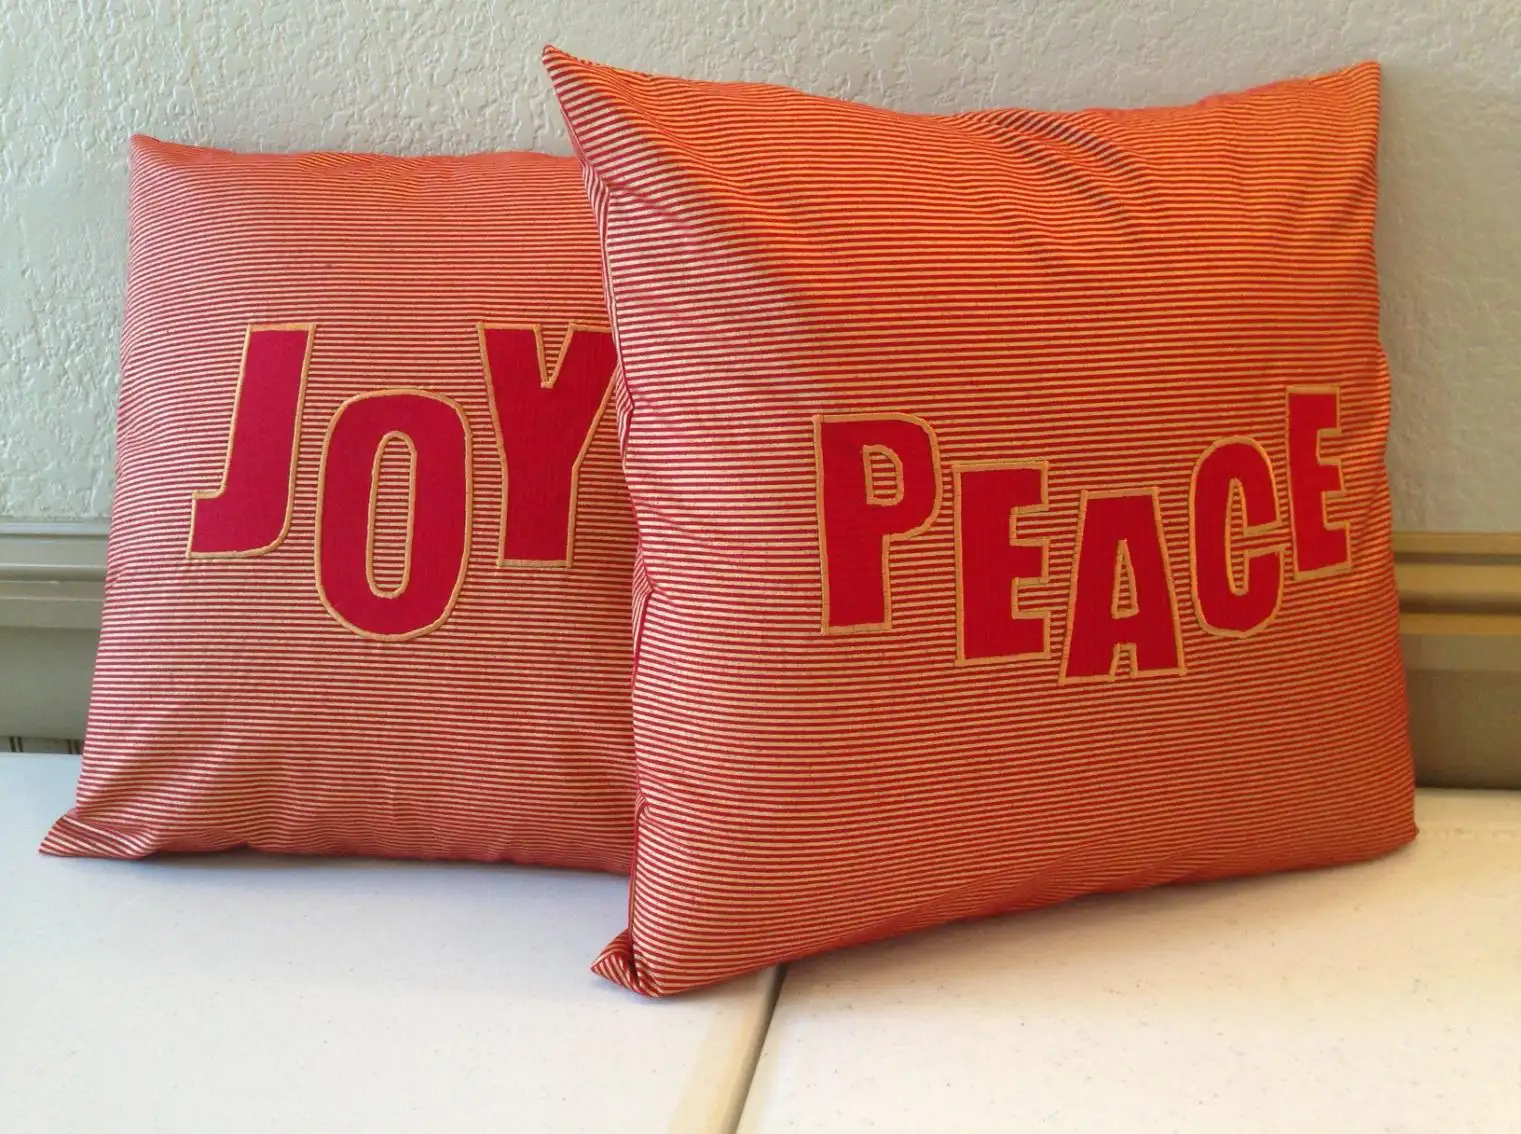 DIY decorative pillows with religious motifs